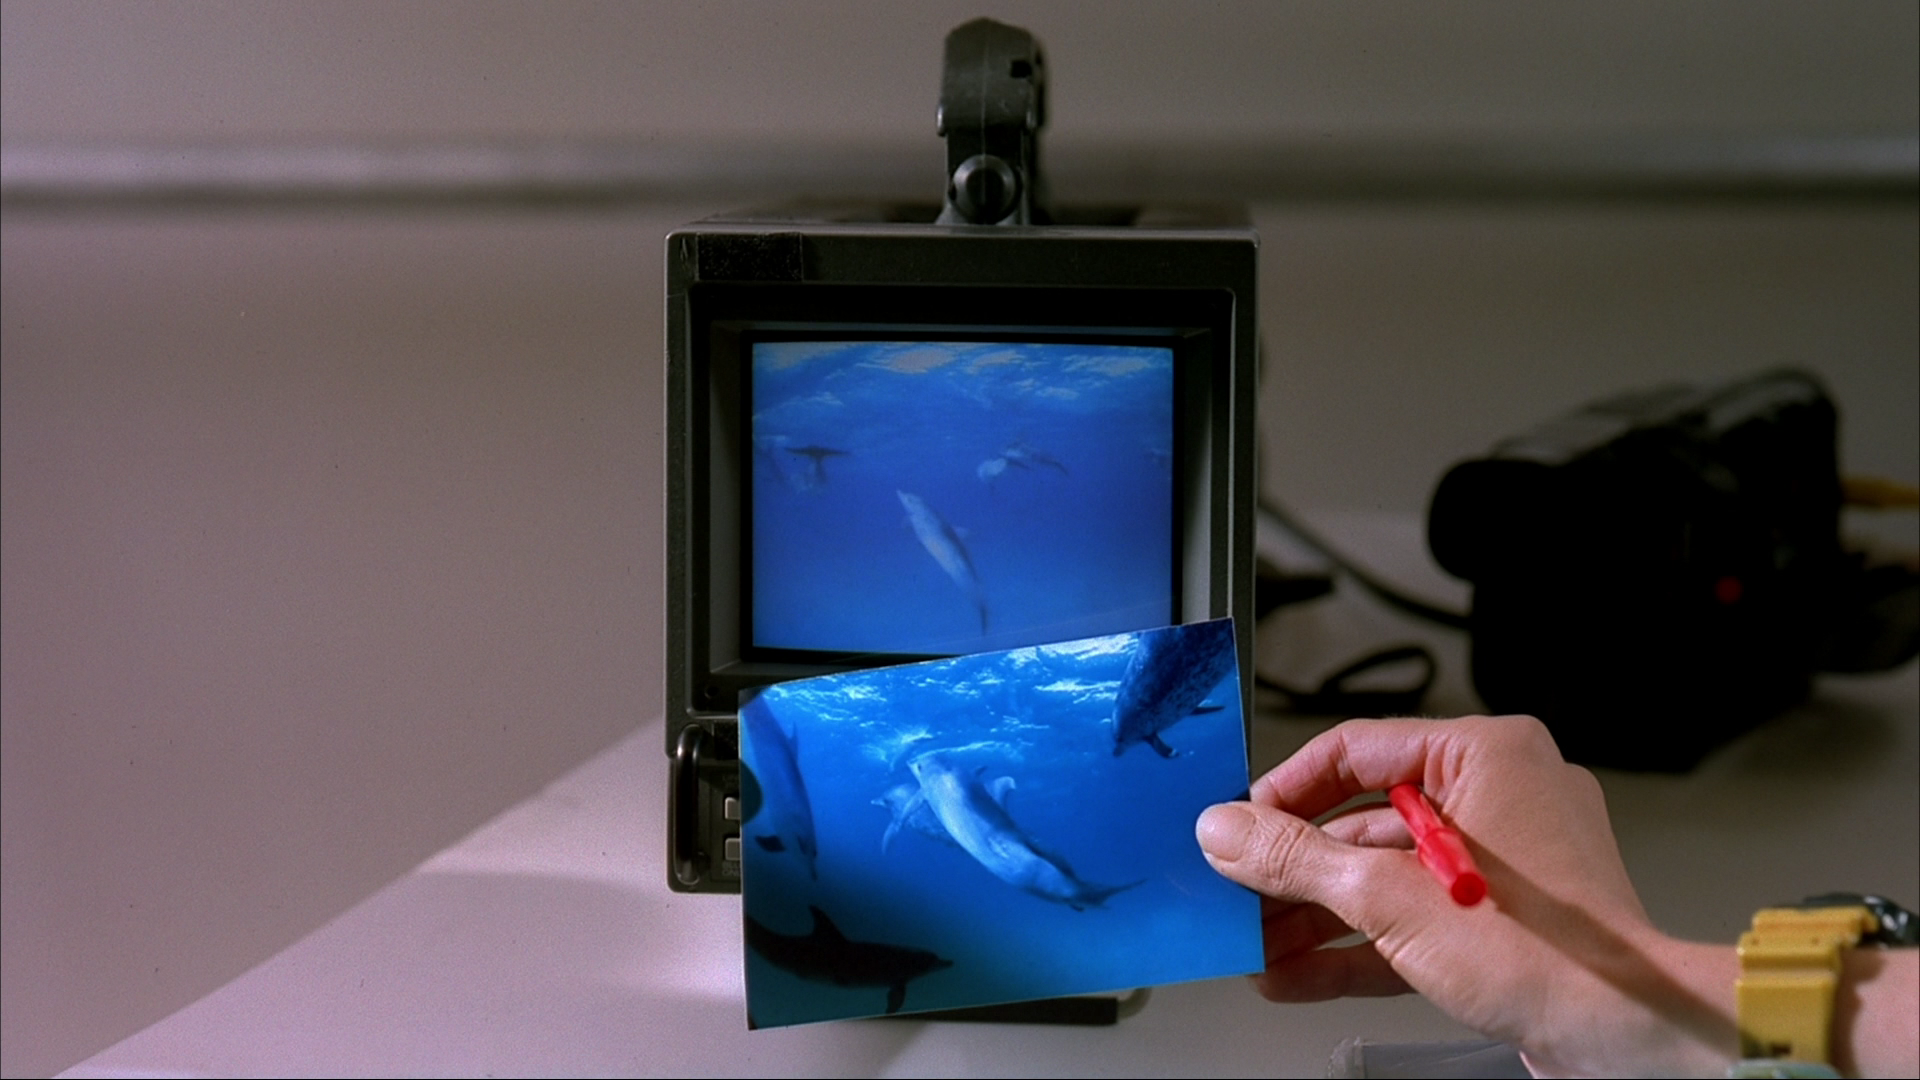 IMAX: Дельфины / IMAX: Dolphins / 2000 / СТ / Blu-Ray Remux (1080p)